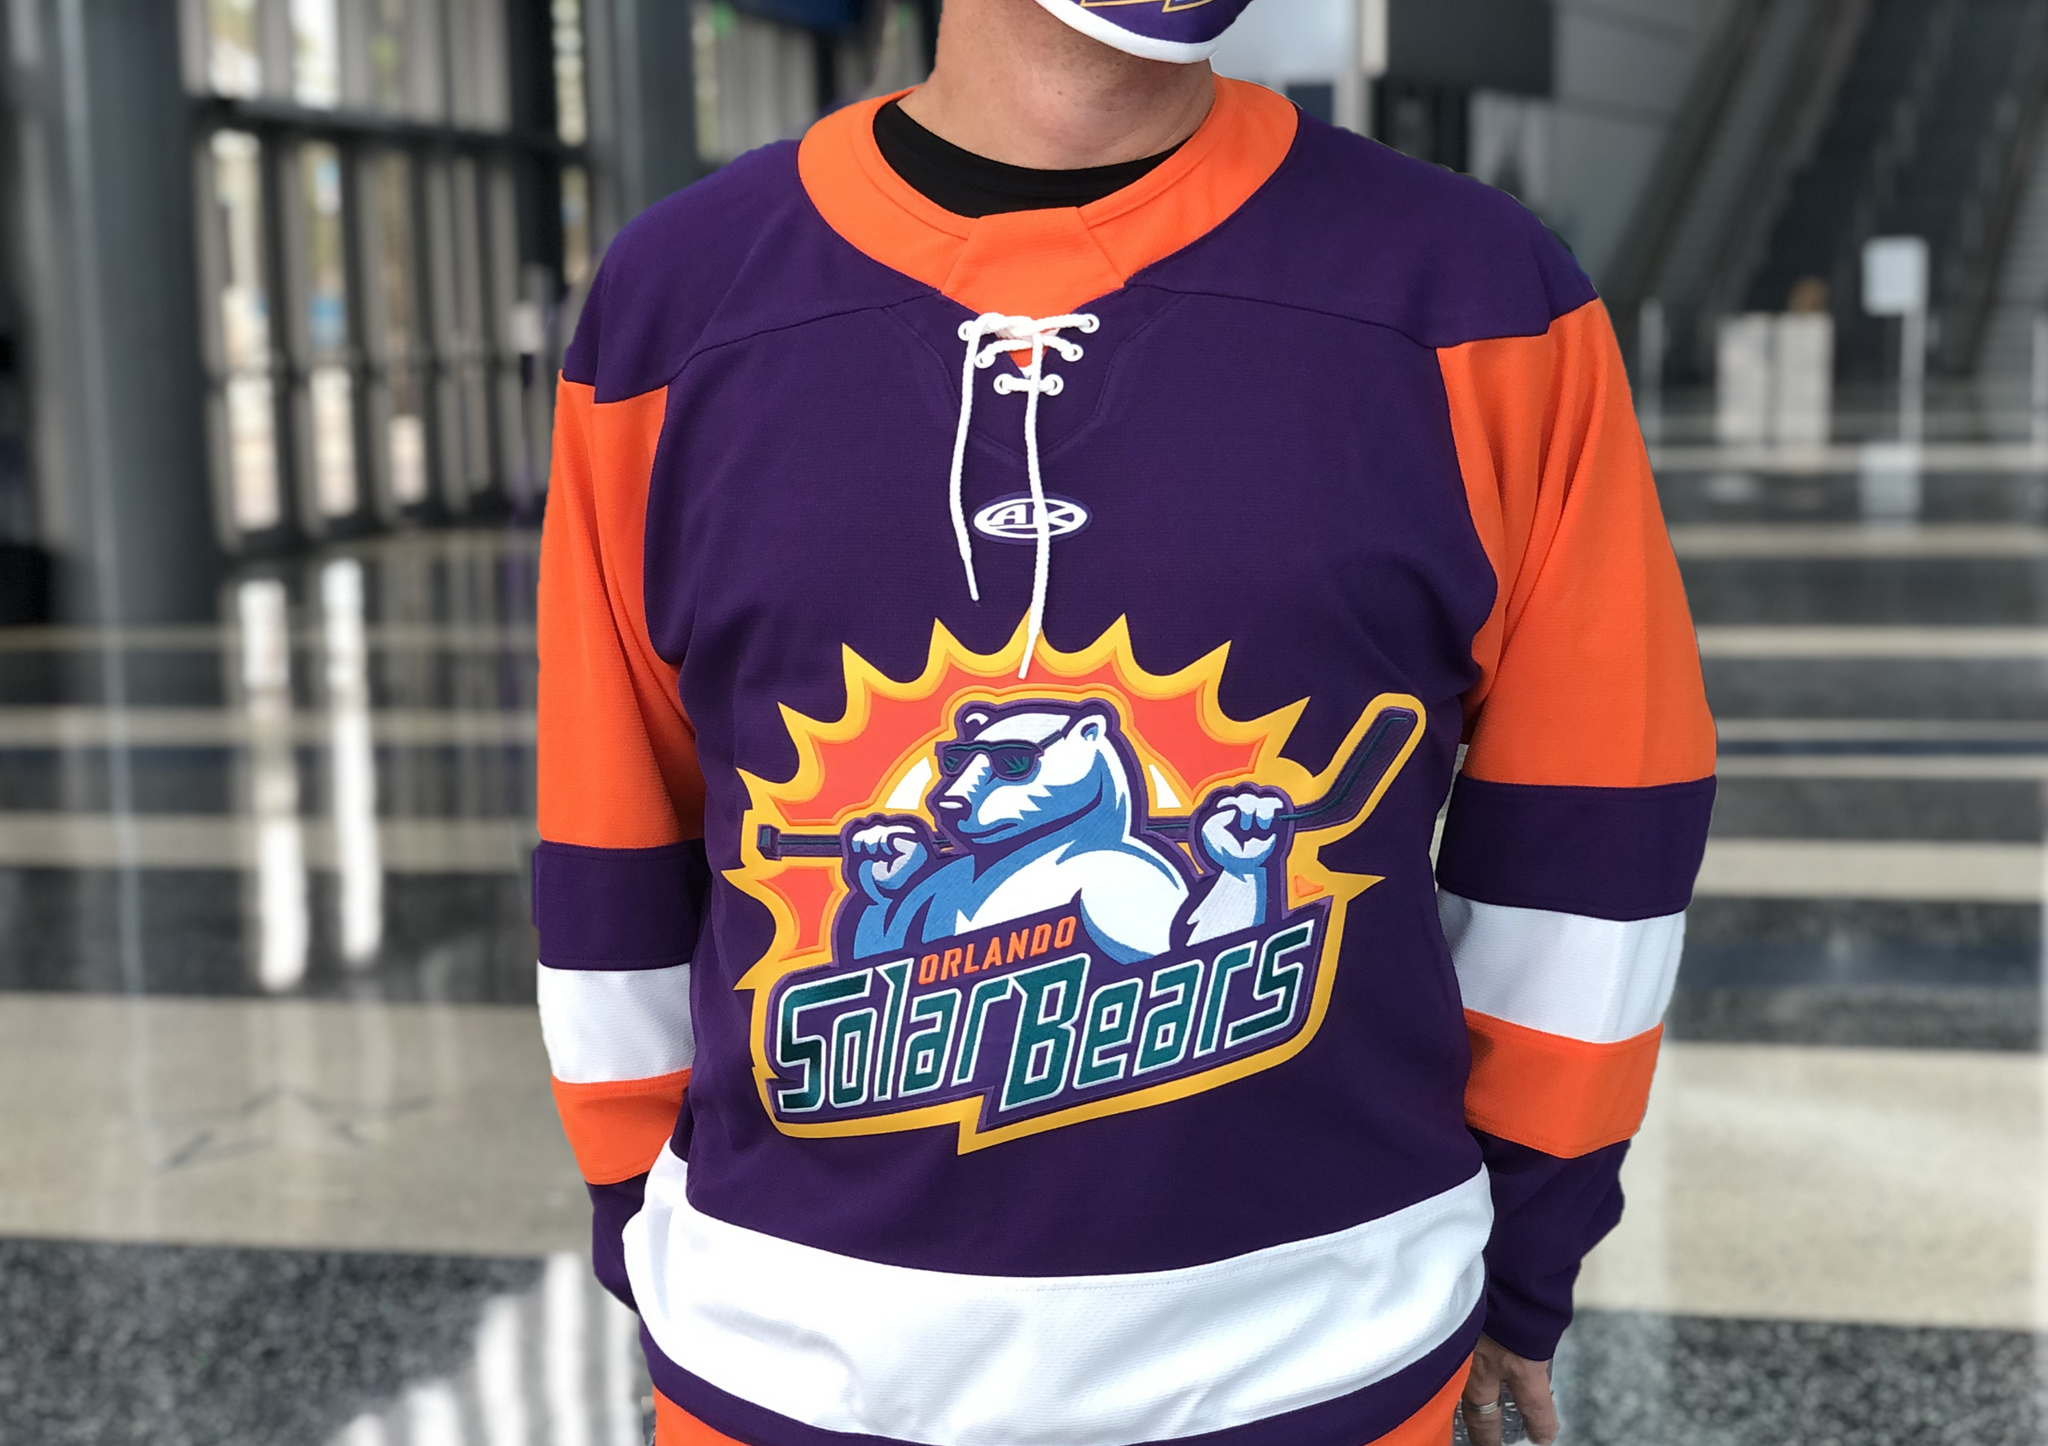 Orlando Solar Bears - Tie Dye Jersey preorder : r/hockeyjerseys